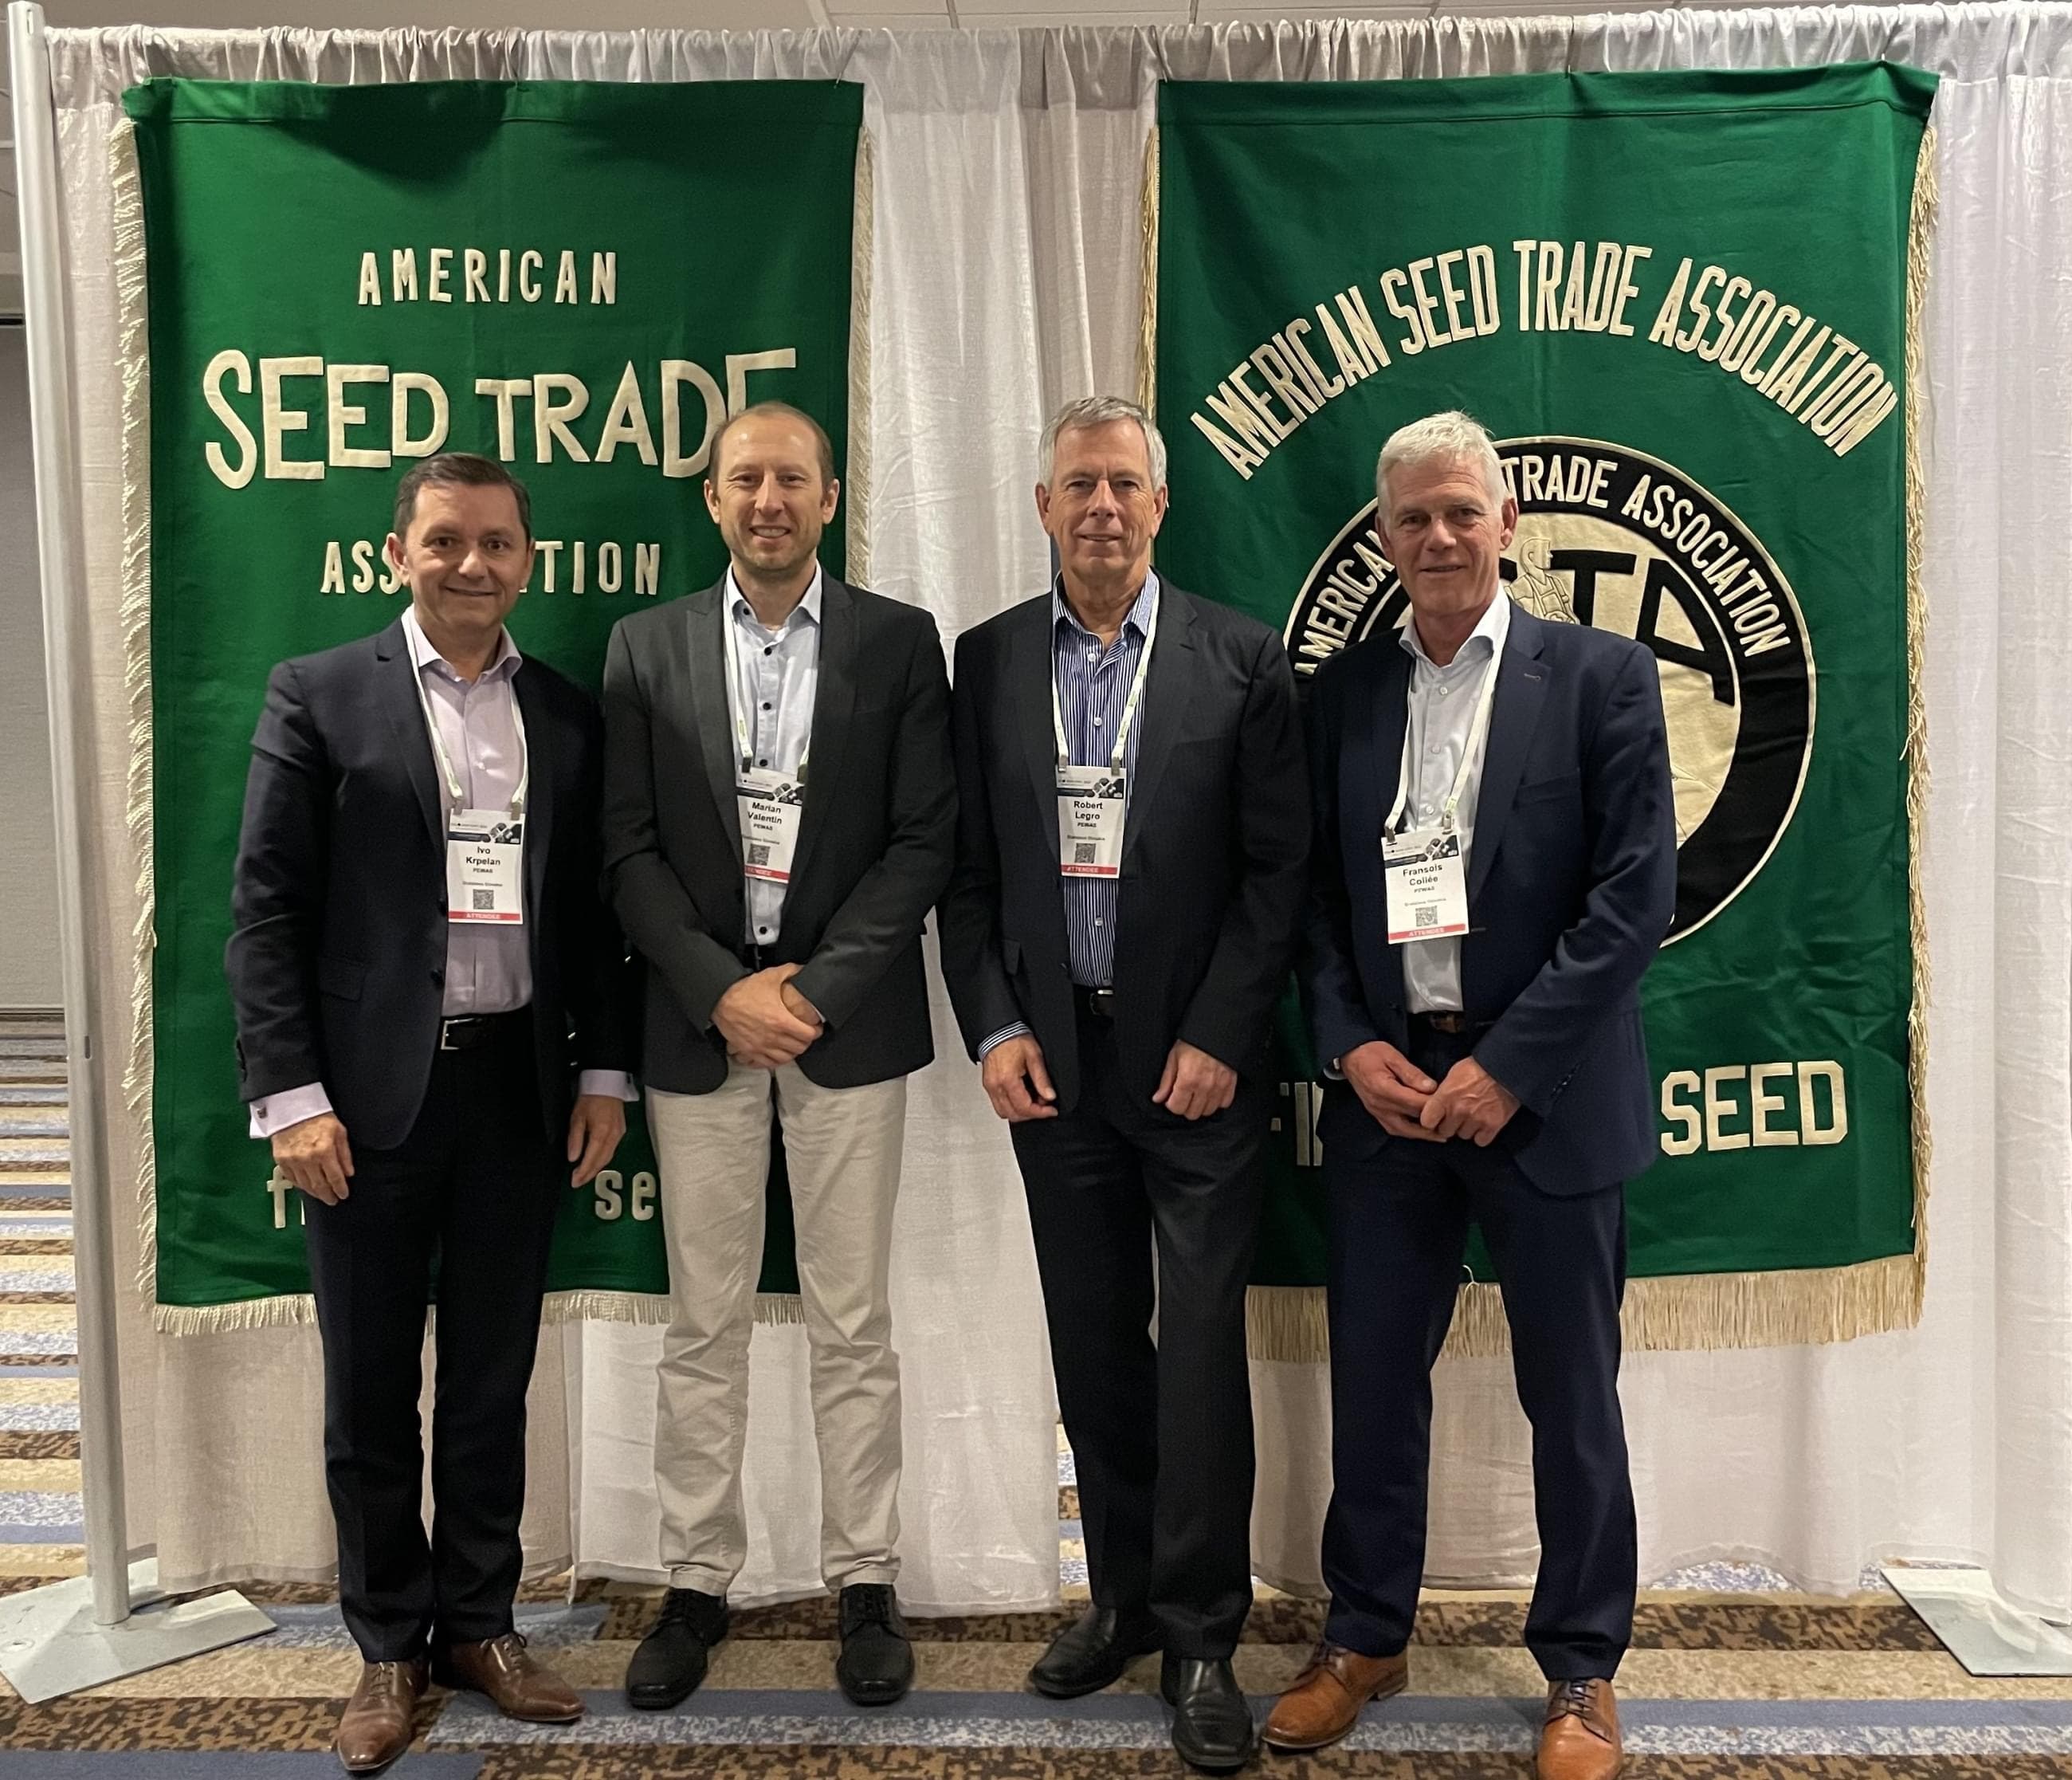 ASTAAmerican Seed Trade Association